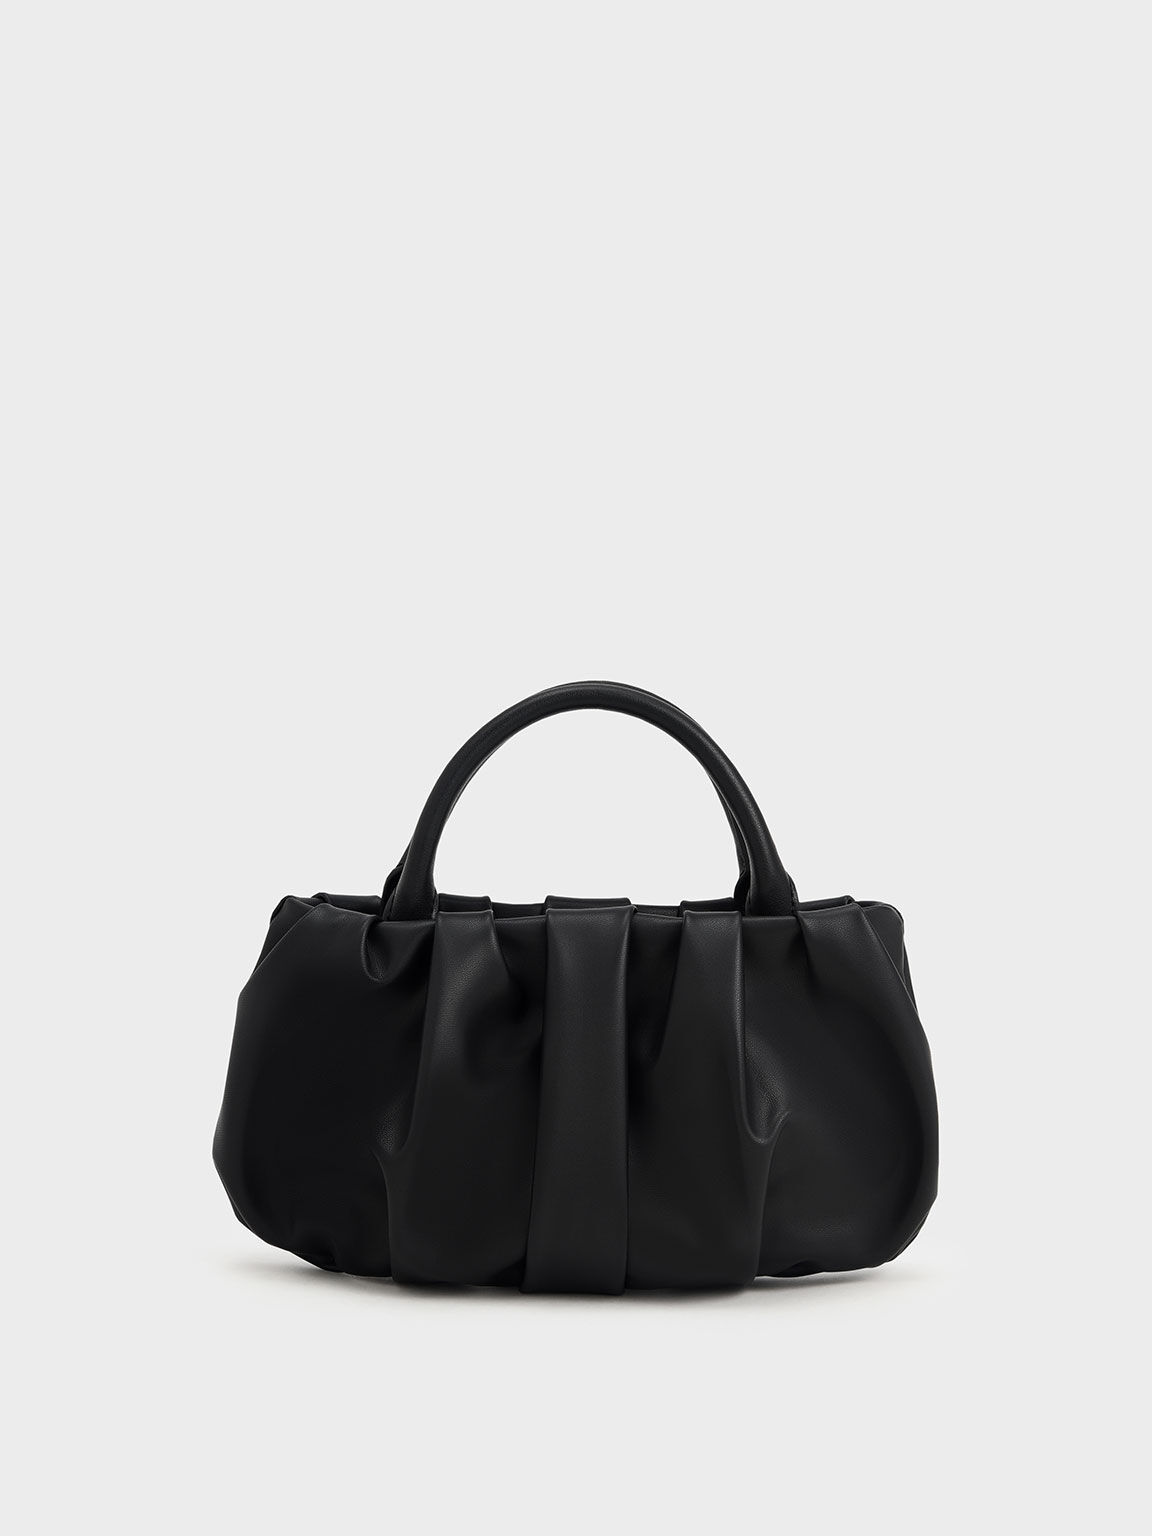 Claudette Ruched Top Handle Bag​, Black, hi-res